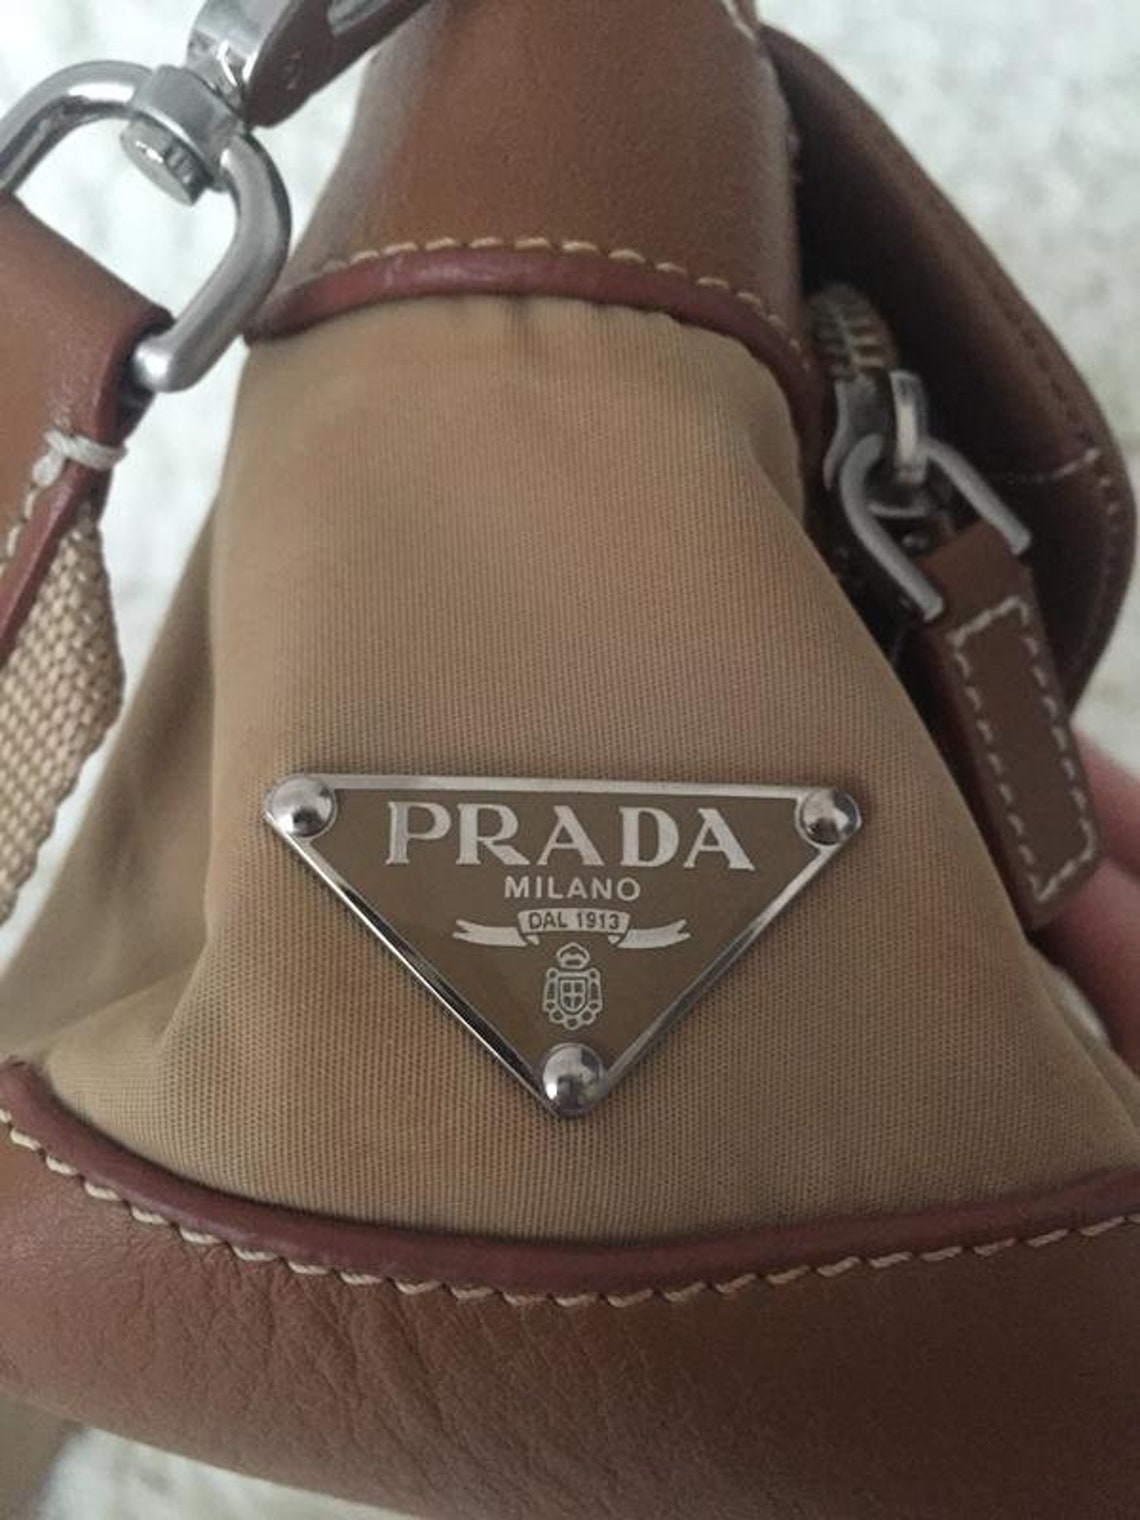 Vintage Prada Milano DAL 1913 authentic shoulder bag | Etsy